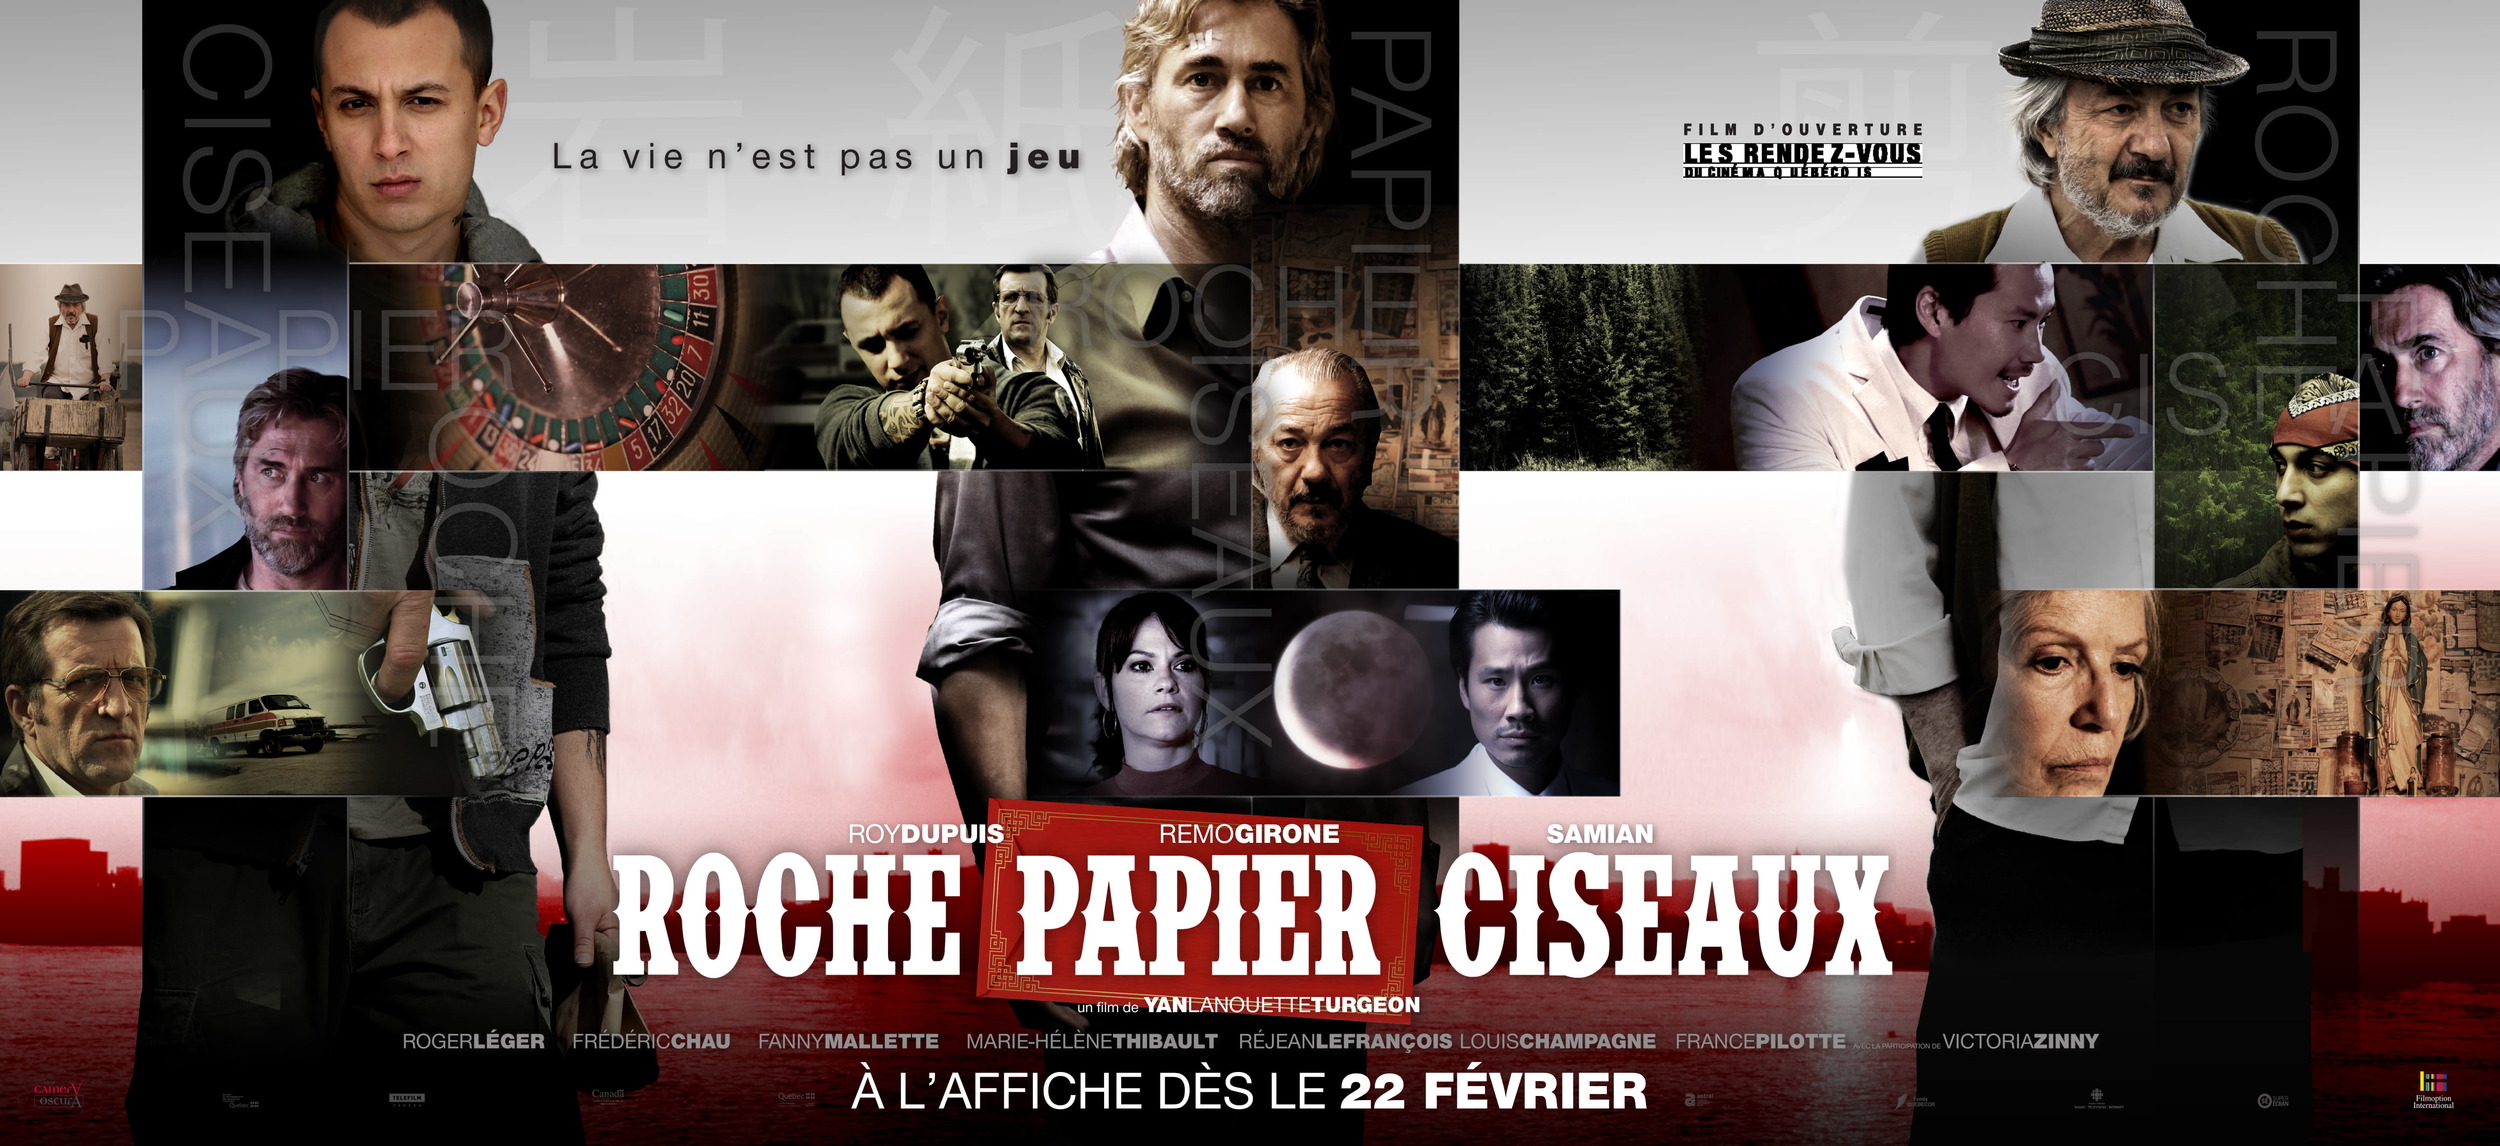 Mega Sized Movie Poster Image for Roche papier ciseaux (#4 of 4)